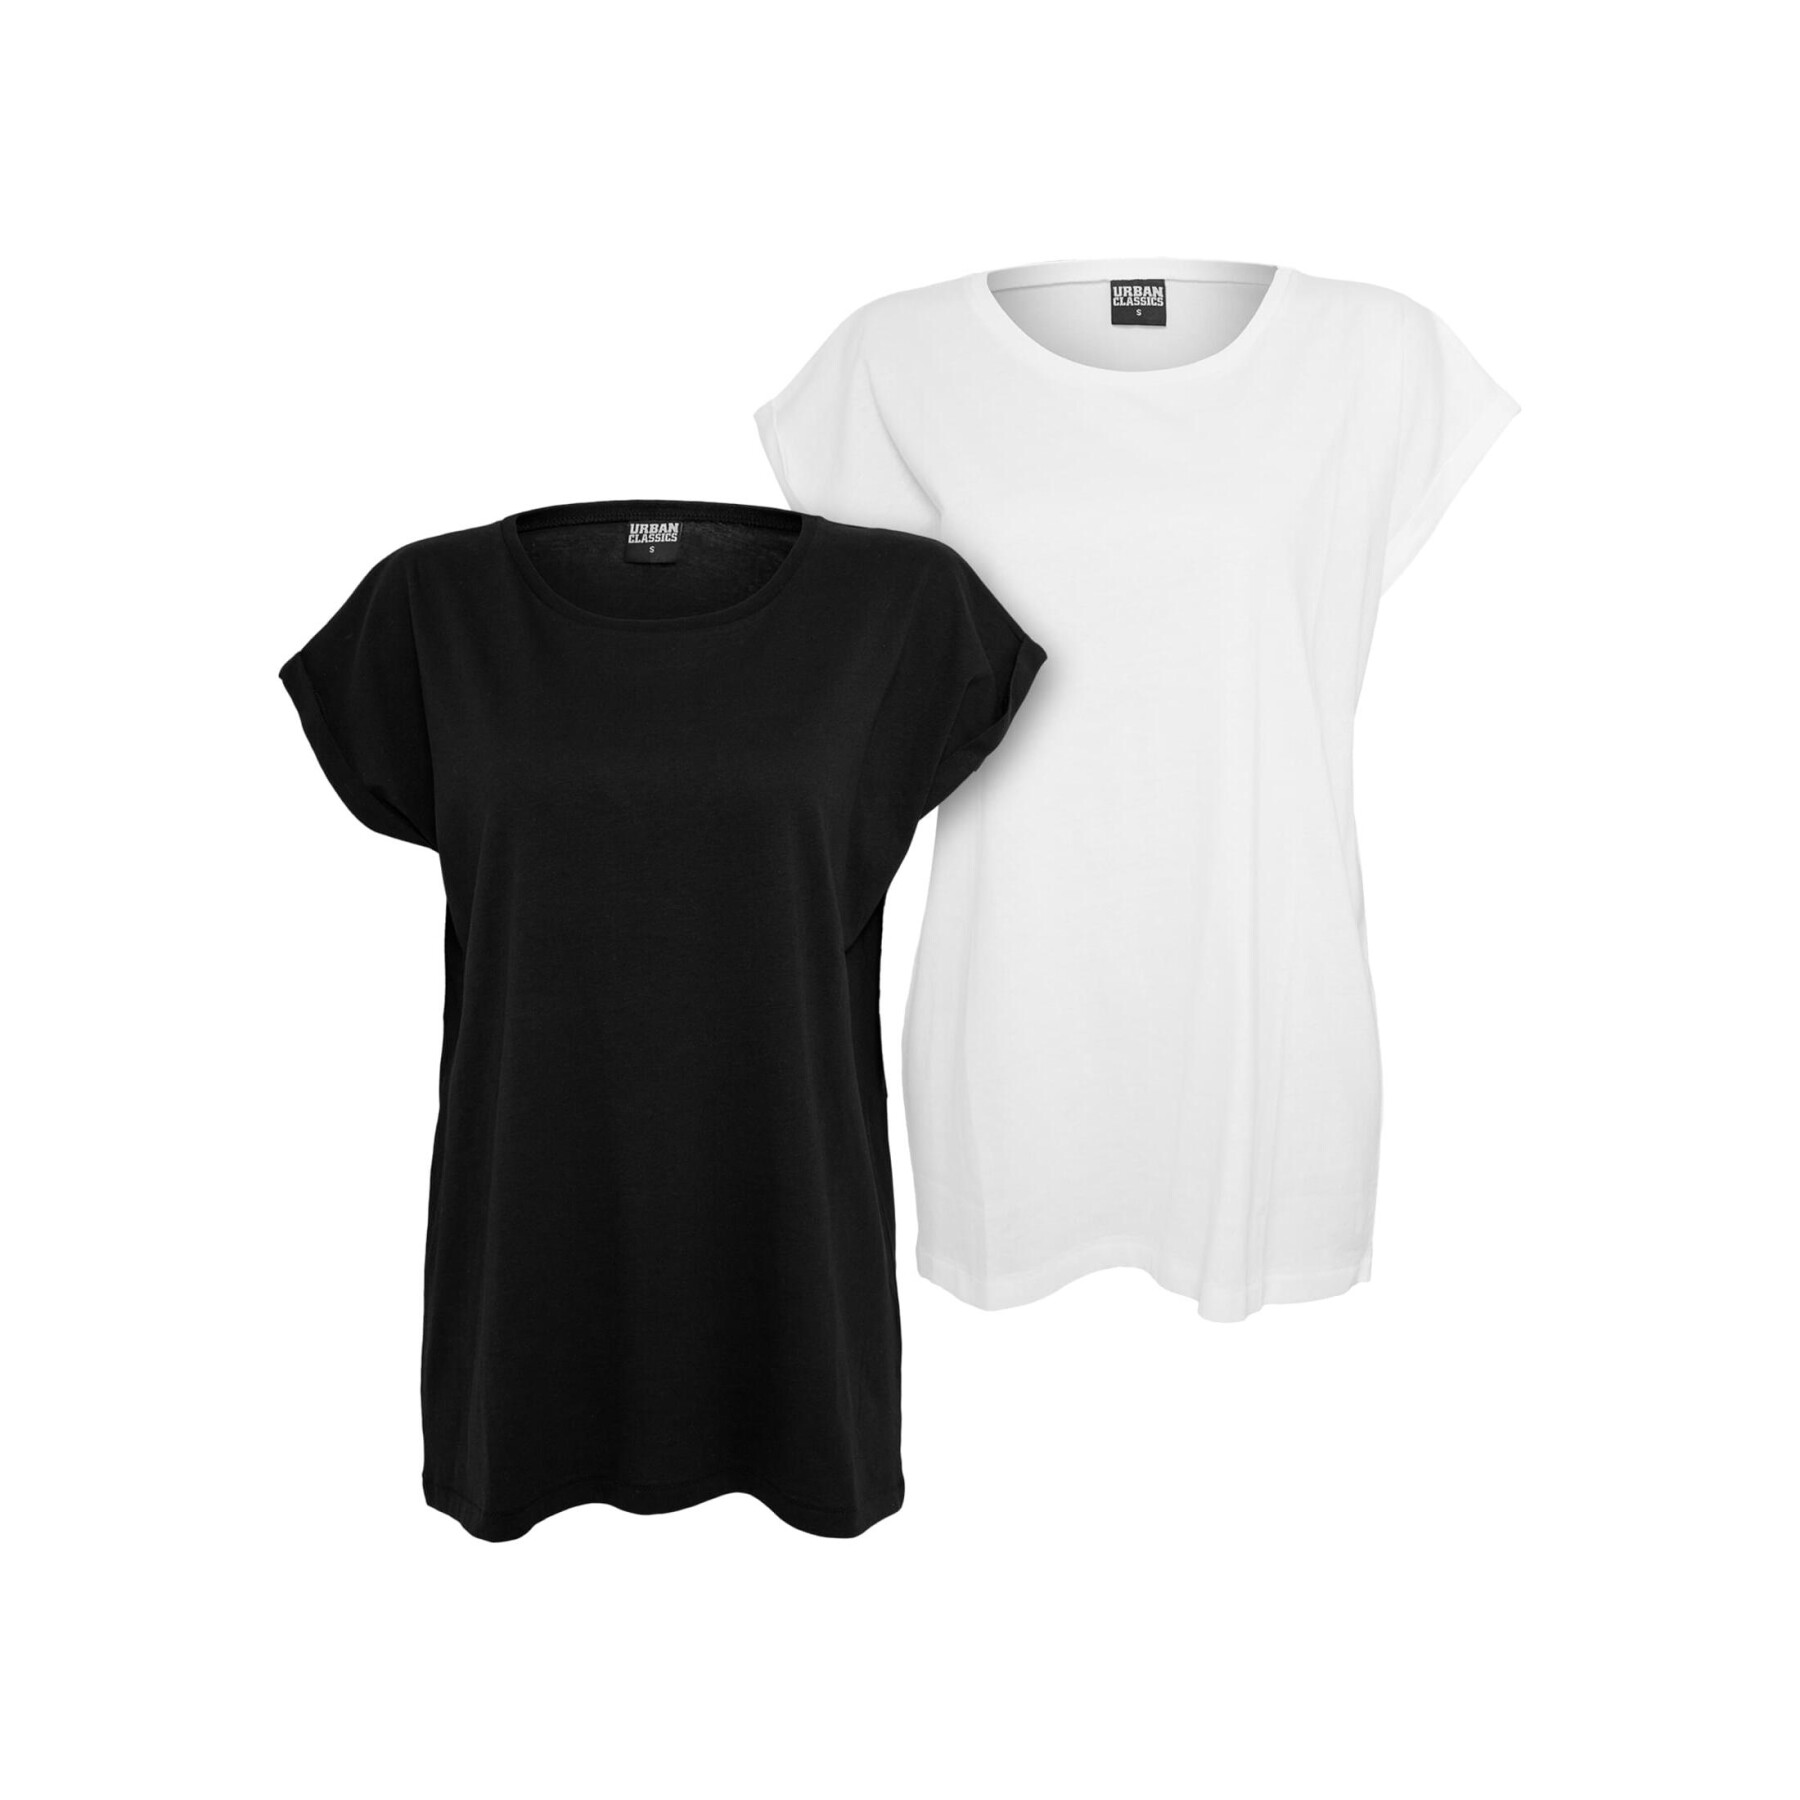 Lote de 2 camisetas mujer Urban Classics Extended Shoulder